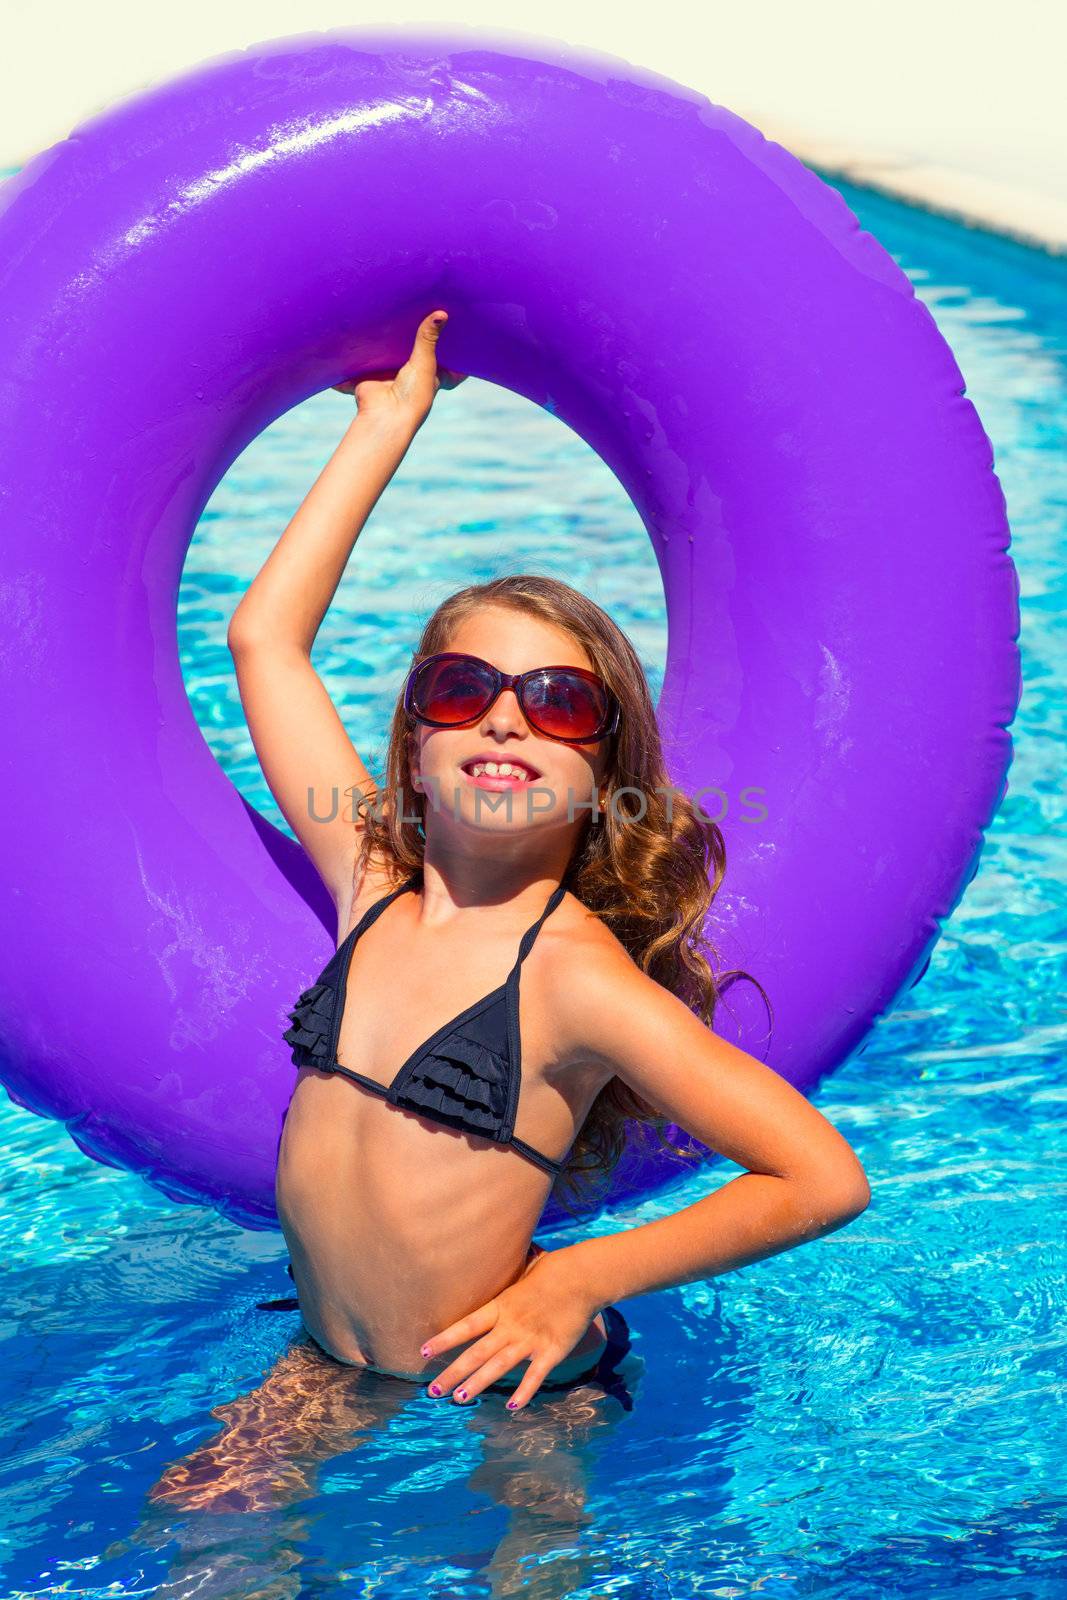 bikini kid girl with fashion sunglasses with purple inflatable pool ring